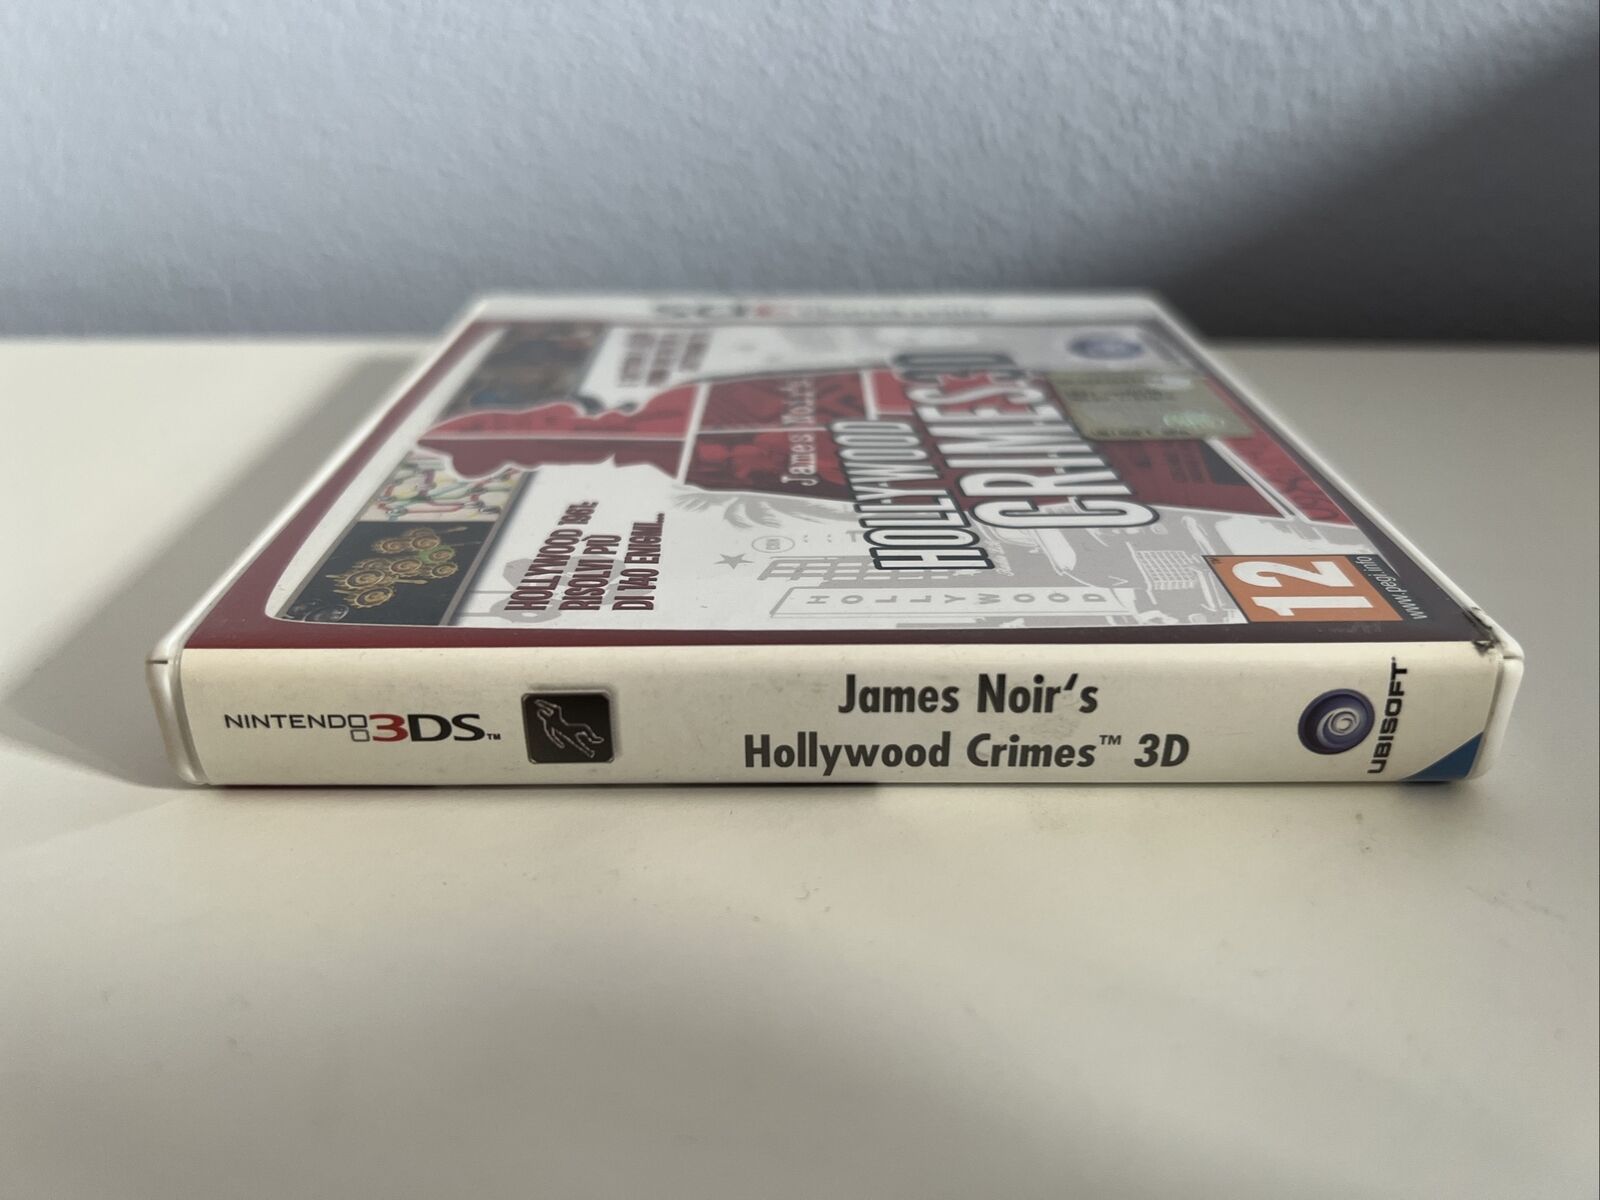 Nintendo-3DS2DS-Videogioco-James-Noir-Hollywood-Crimes-3D-133908321323-2